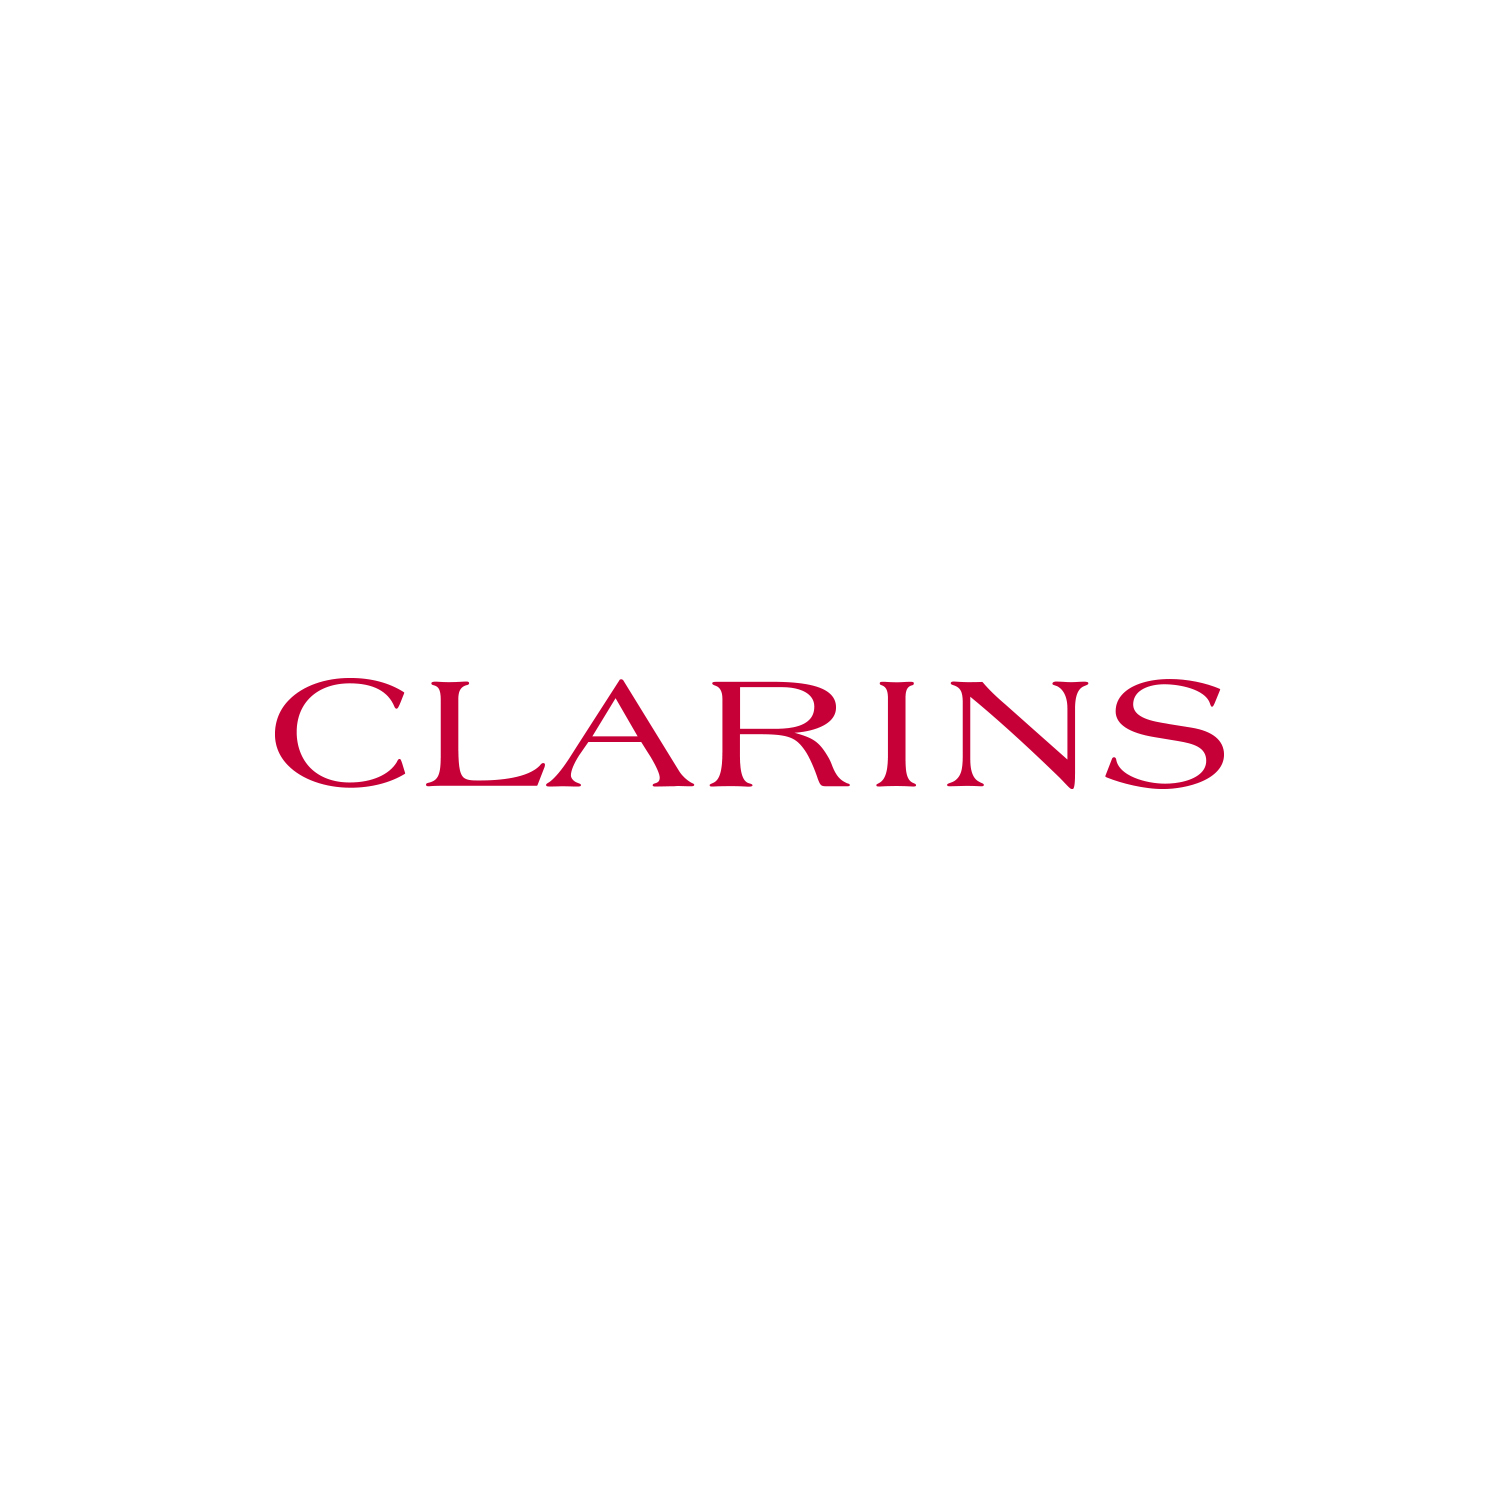 Logo Clarins